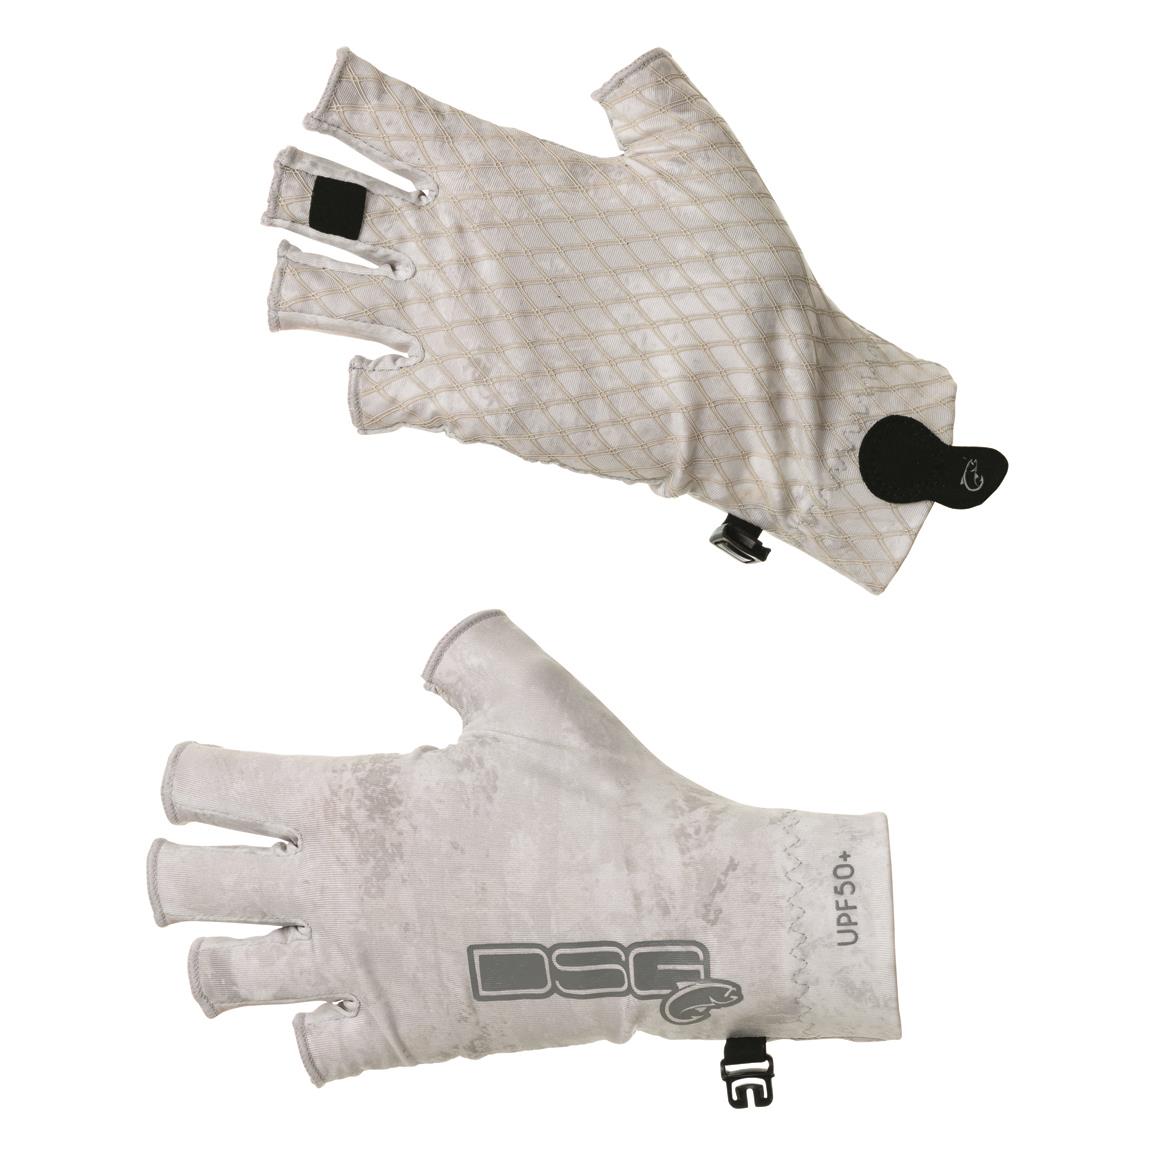 Striker Women's Stella Ice Fishing Gloves - 728754, Hats, Gloves